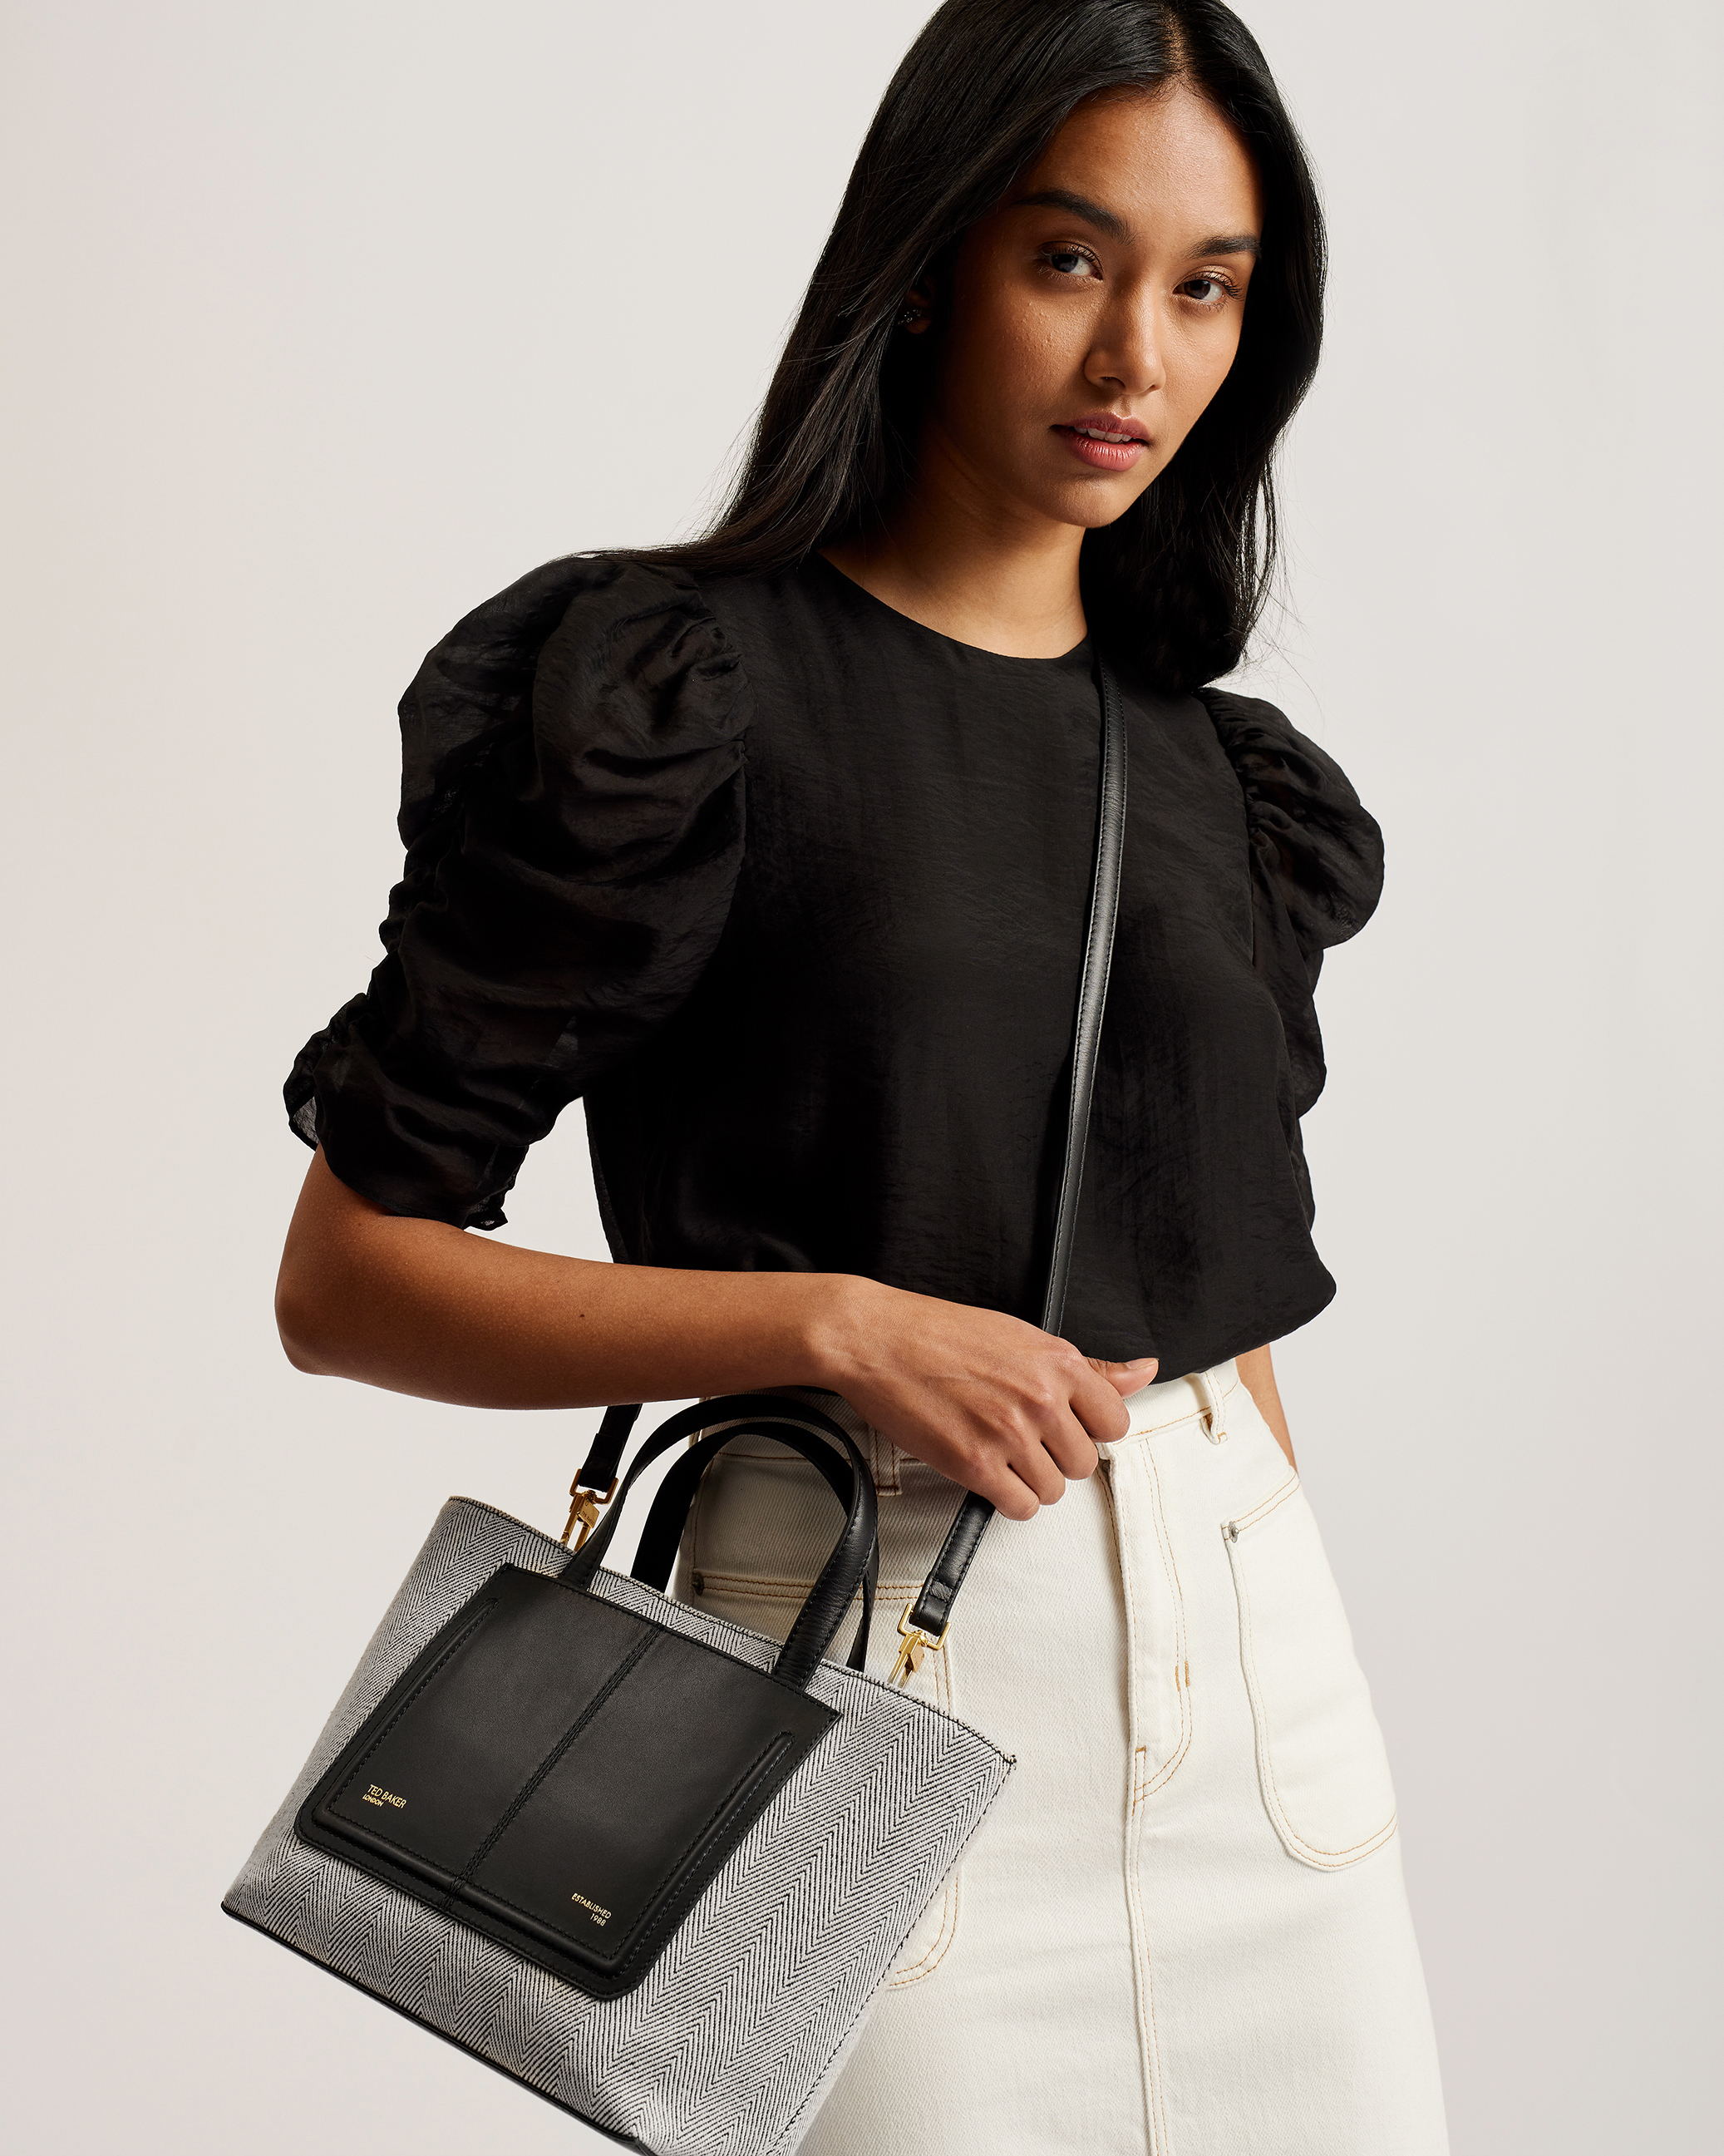 Handbags | Designer Bags | Women's Bags | Ted Baker ROW